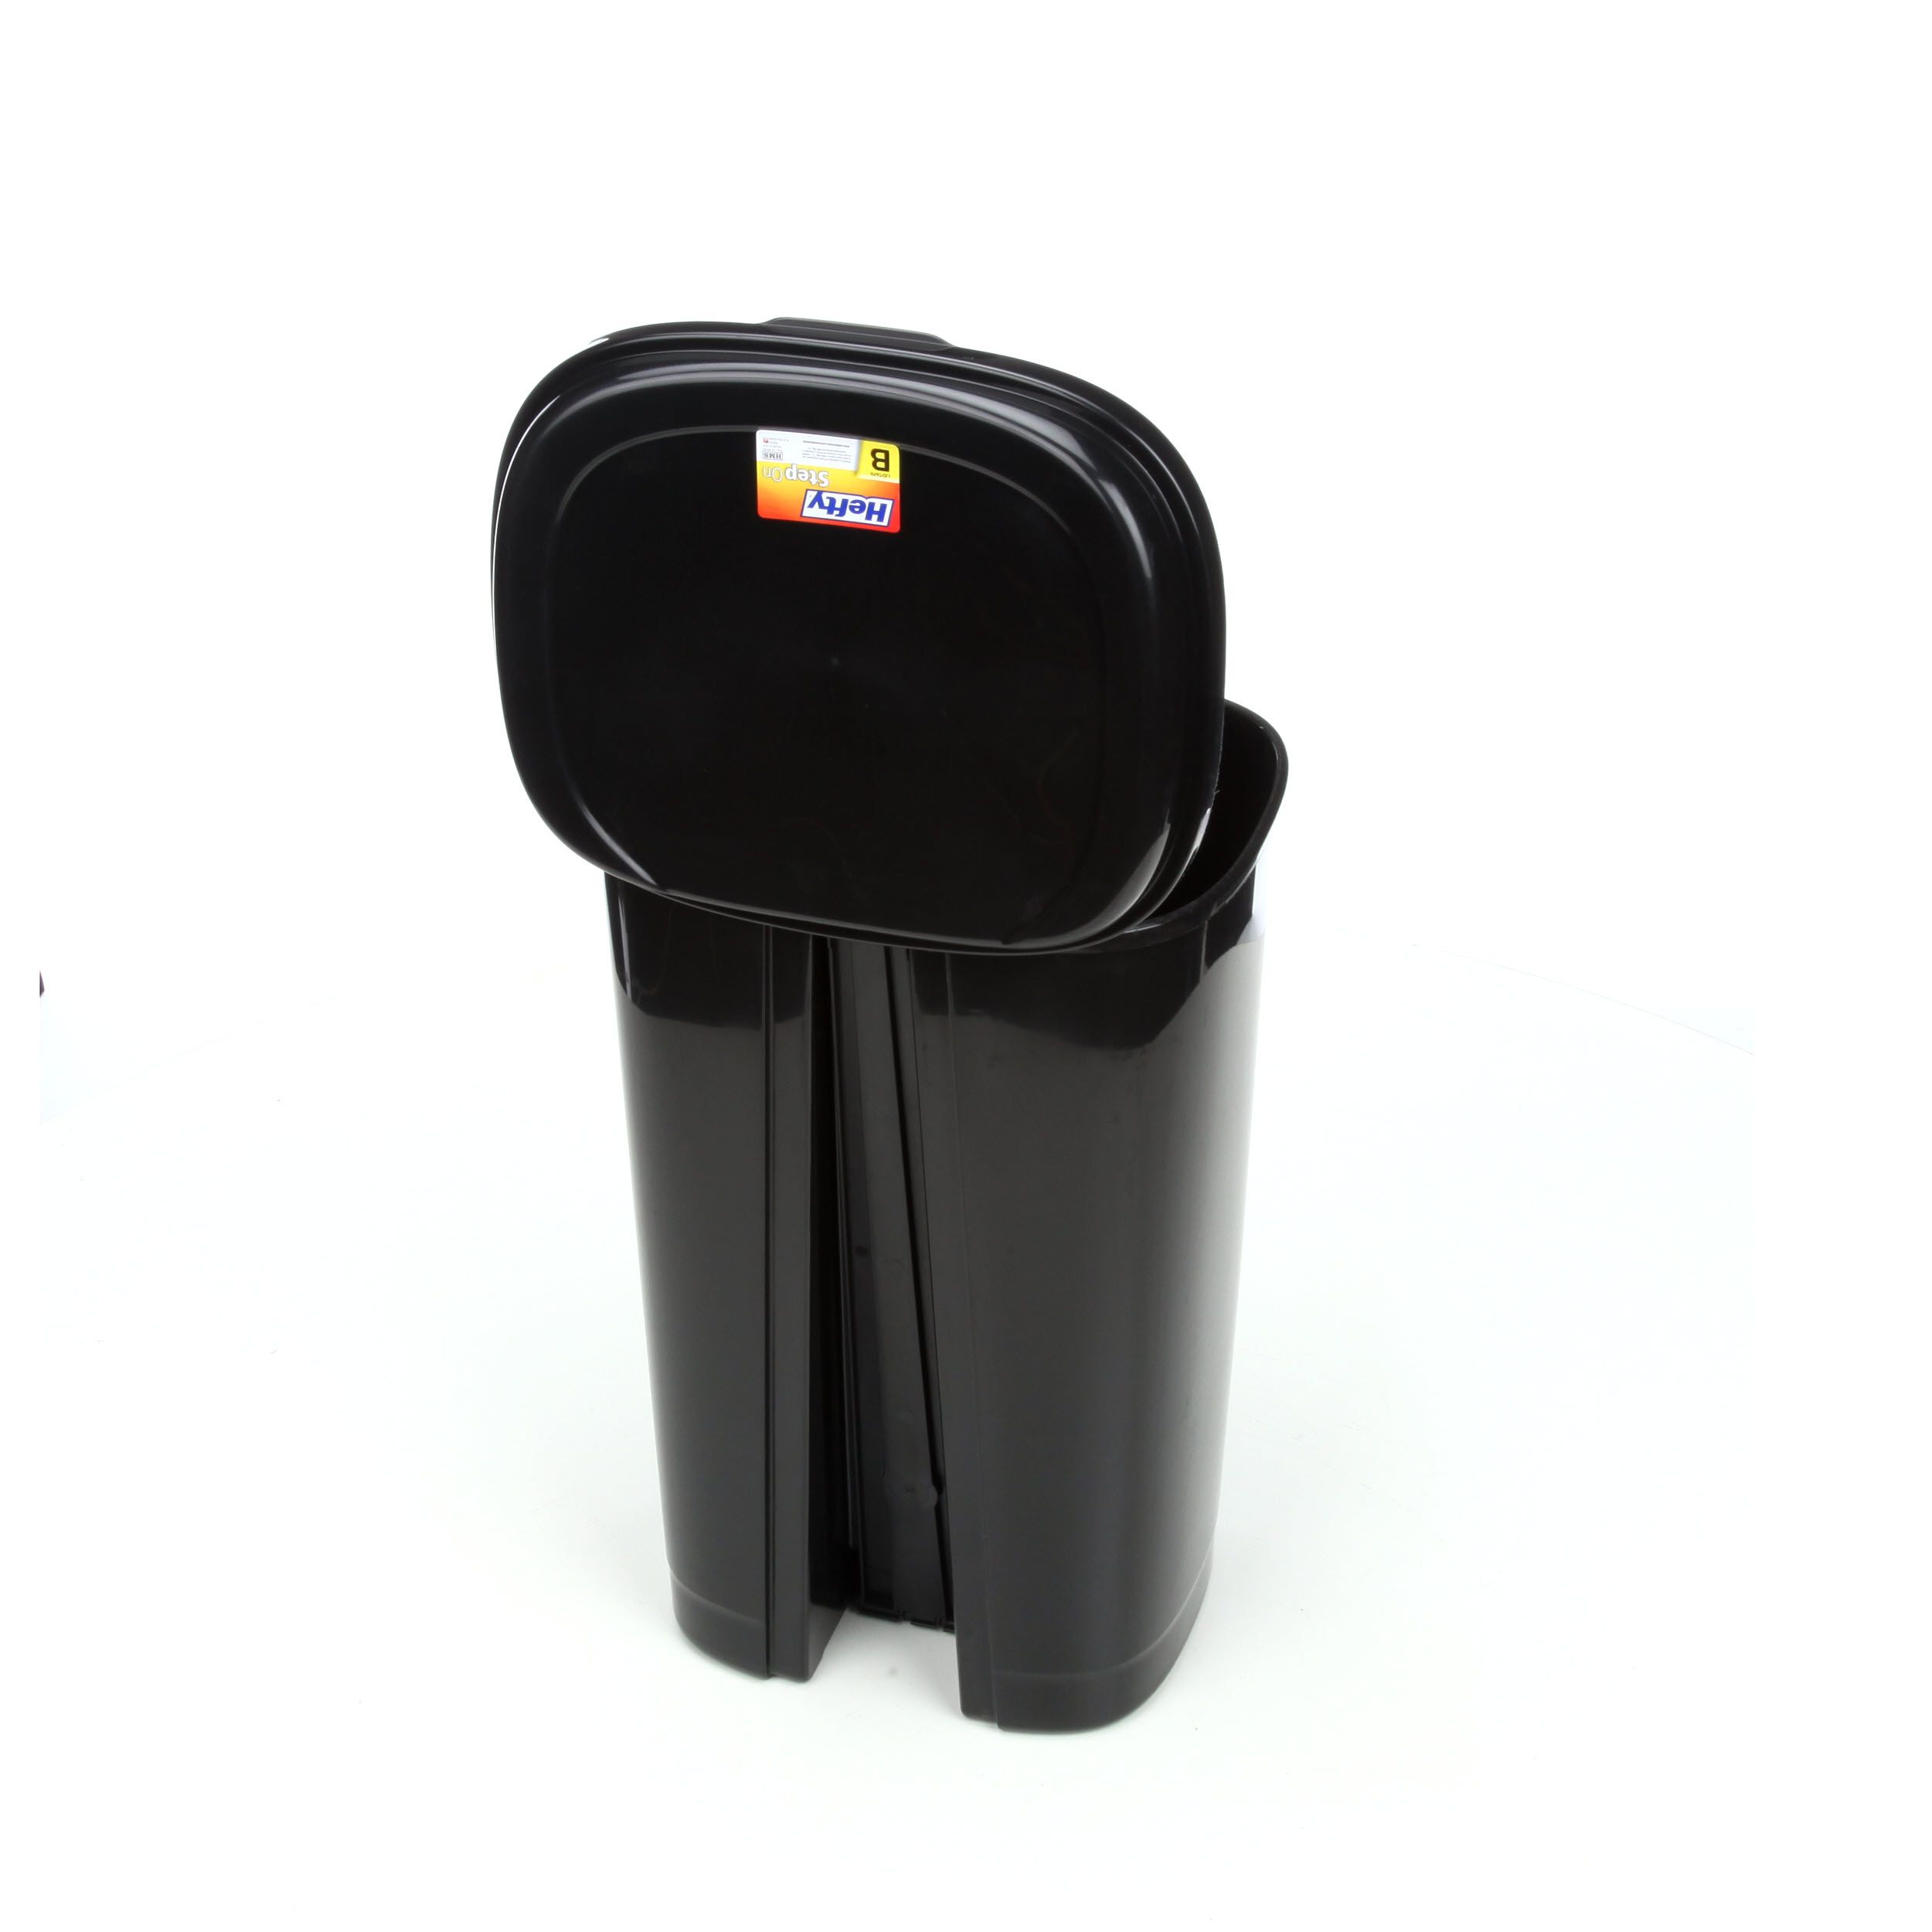 Hefty Black Polished Plastic Wastebasket in the Wastebaskets department at